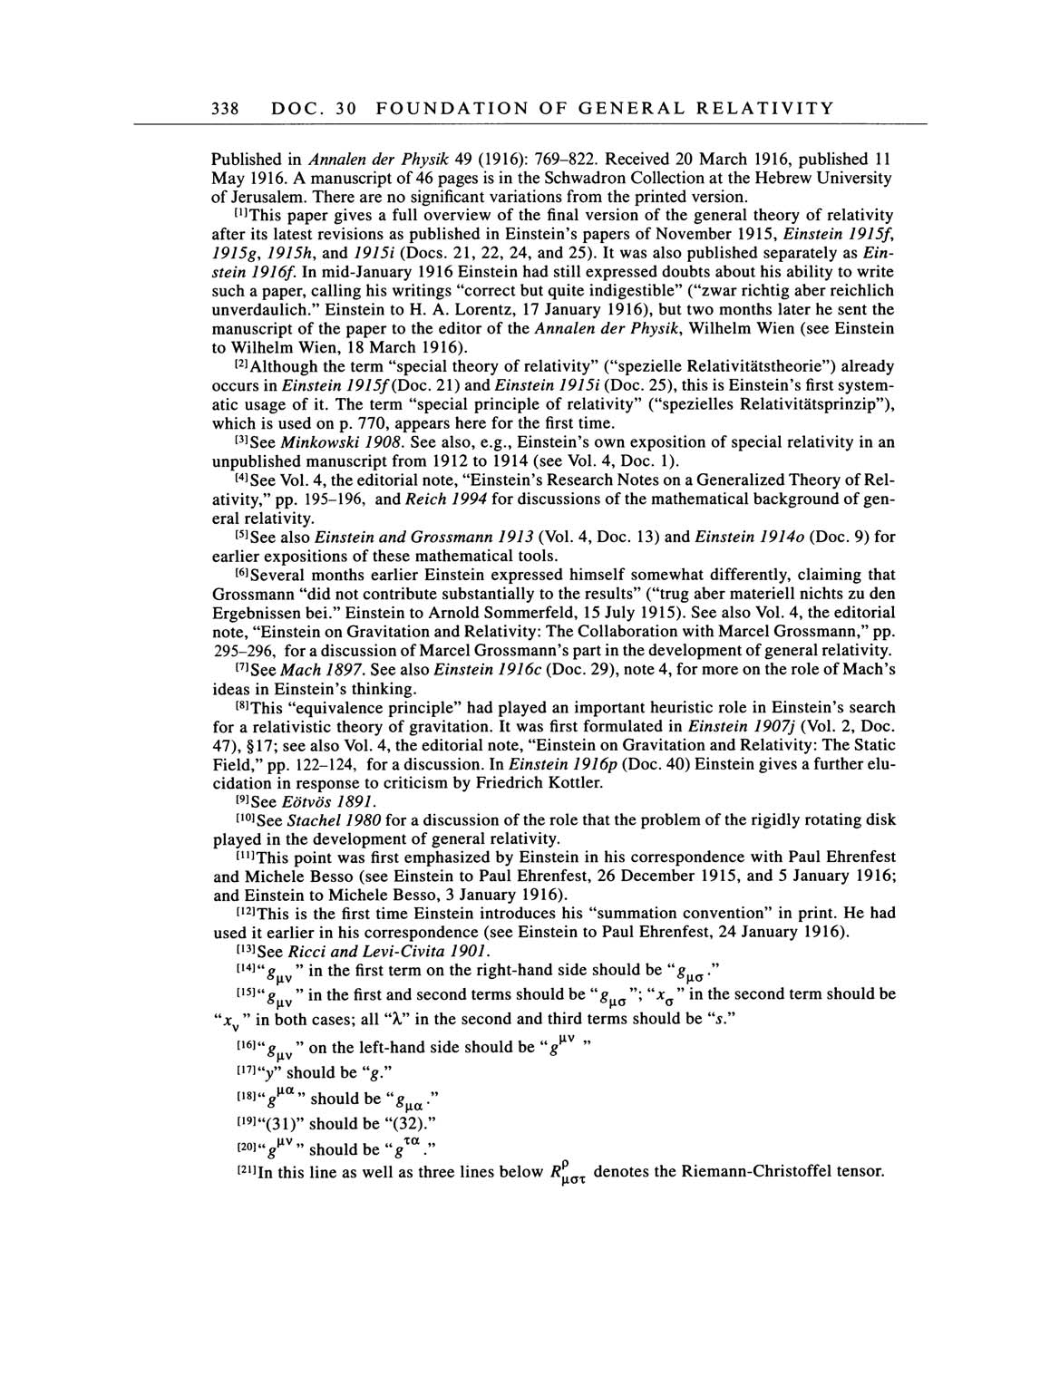 Volume 6: The Berlin Years: Writings, 1914-1917 page 338